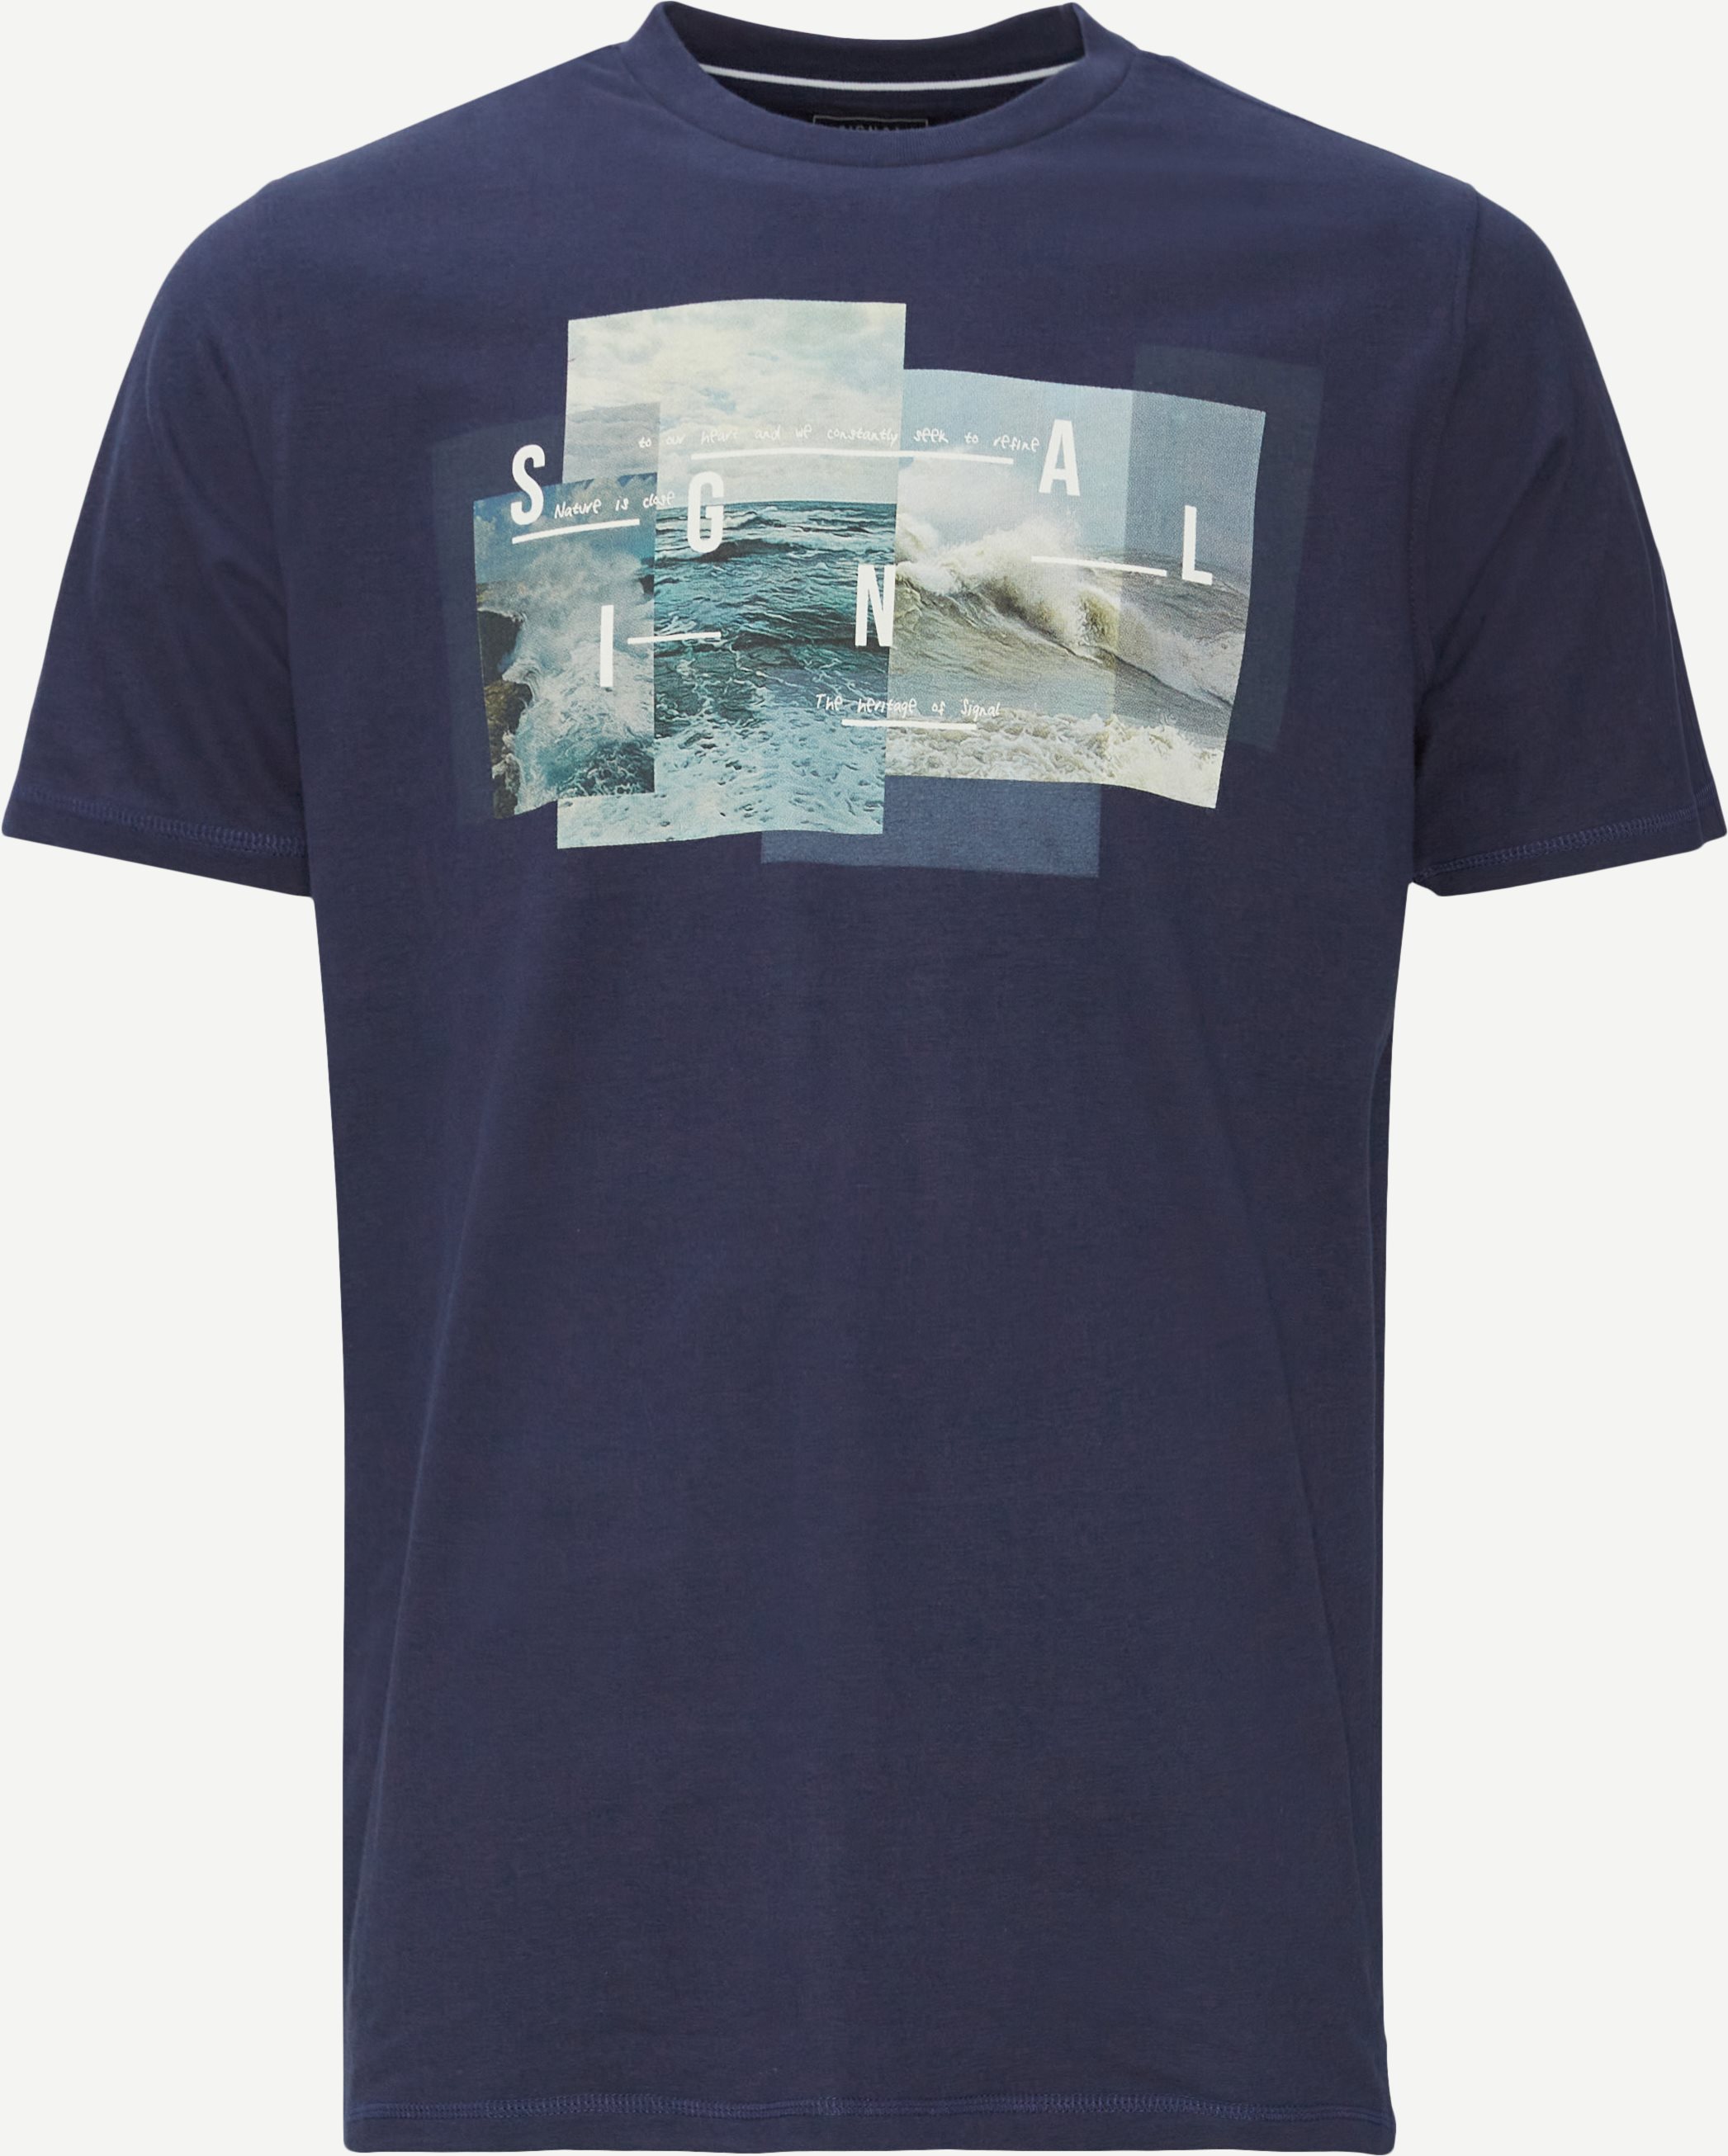 Ed Art T-shirt - T-shirts - Regular fit - Blue